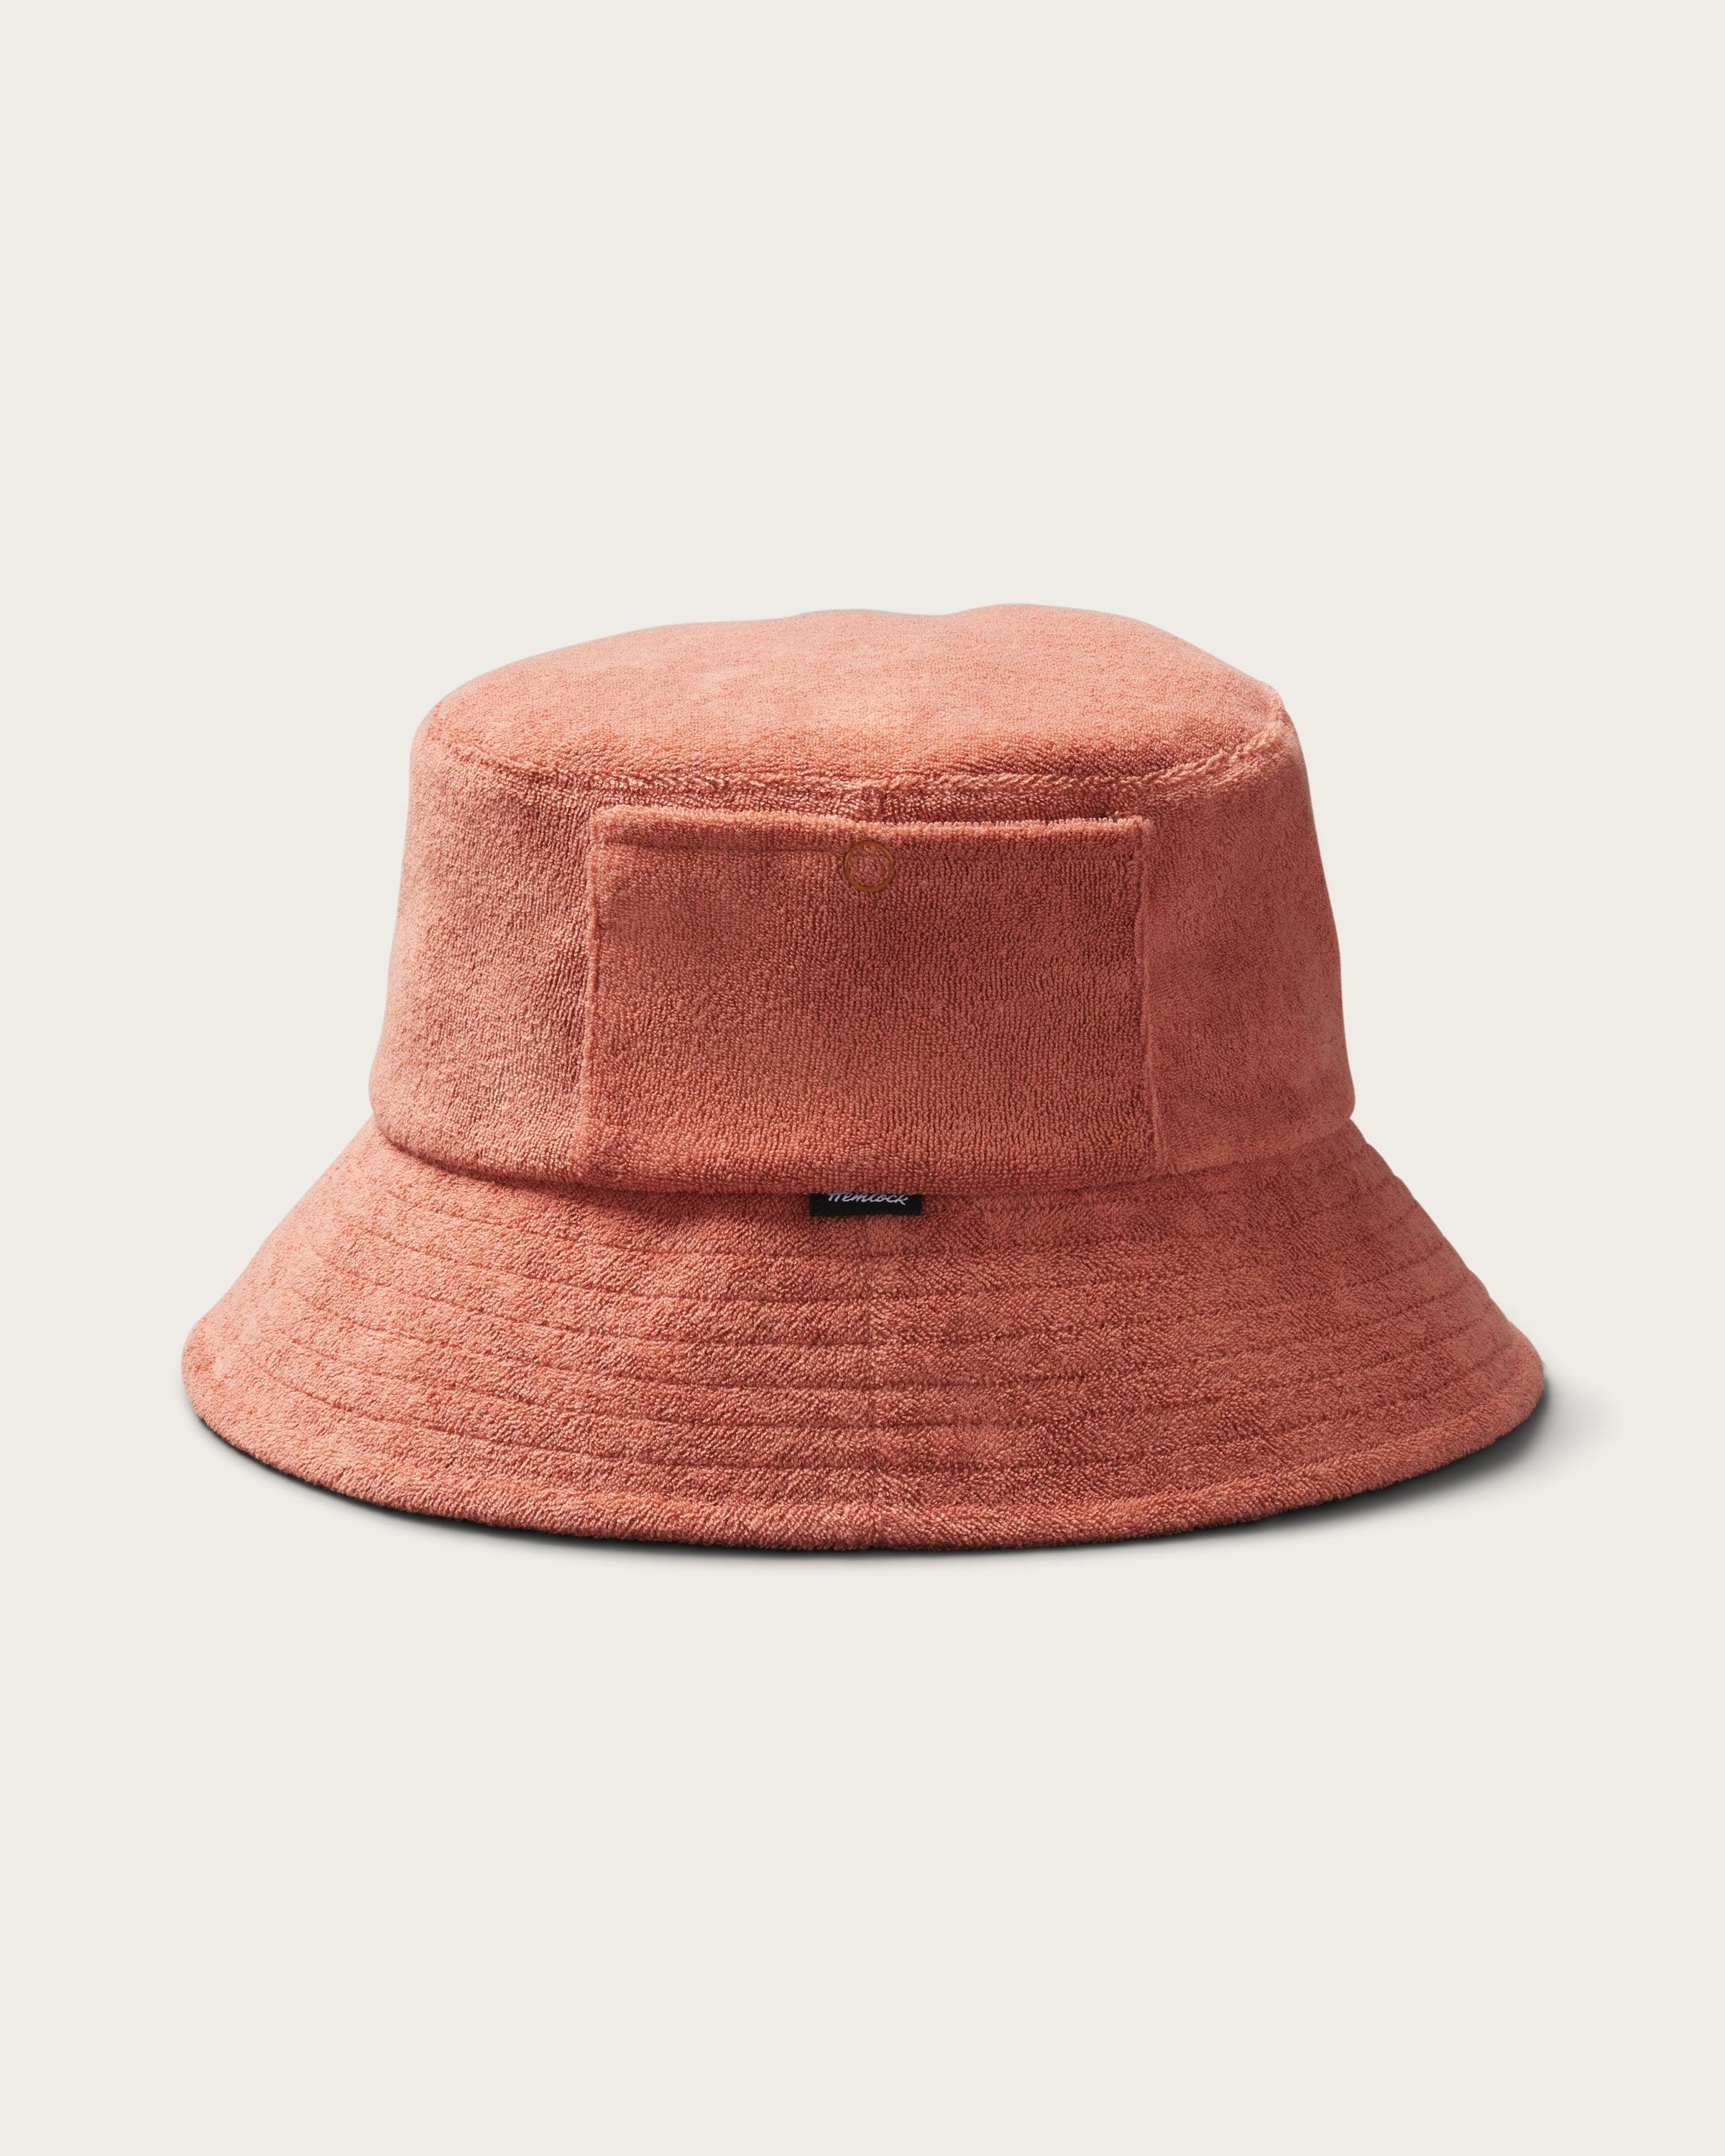 Hemlock Marina Terry Bucket Hat in Red Clay side profile